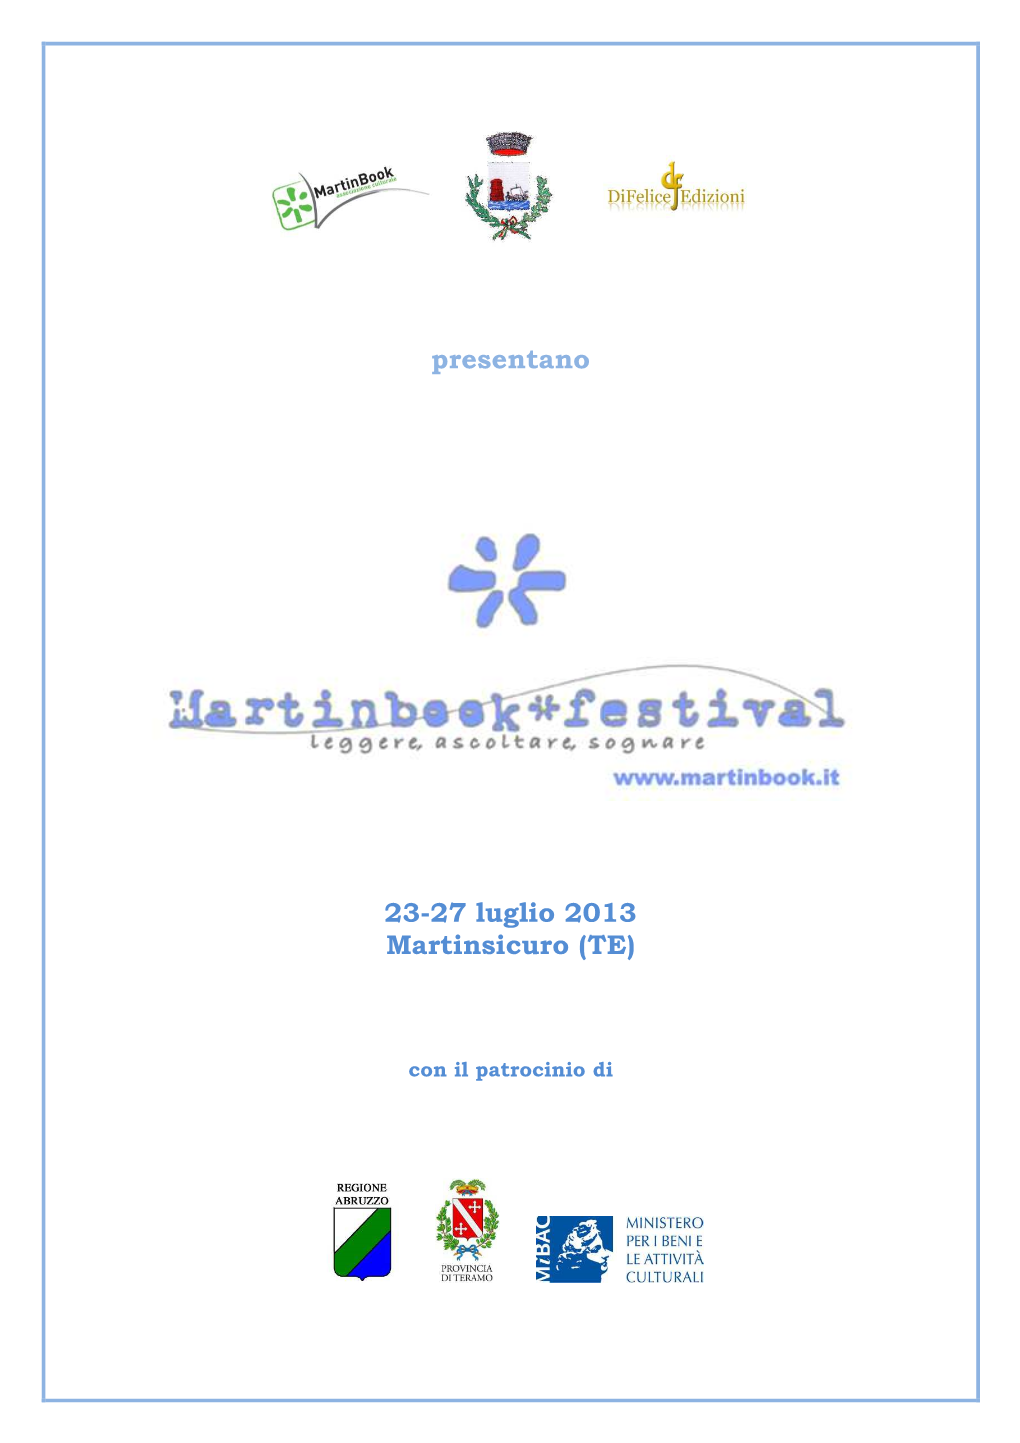 Martinbook Festival 2013